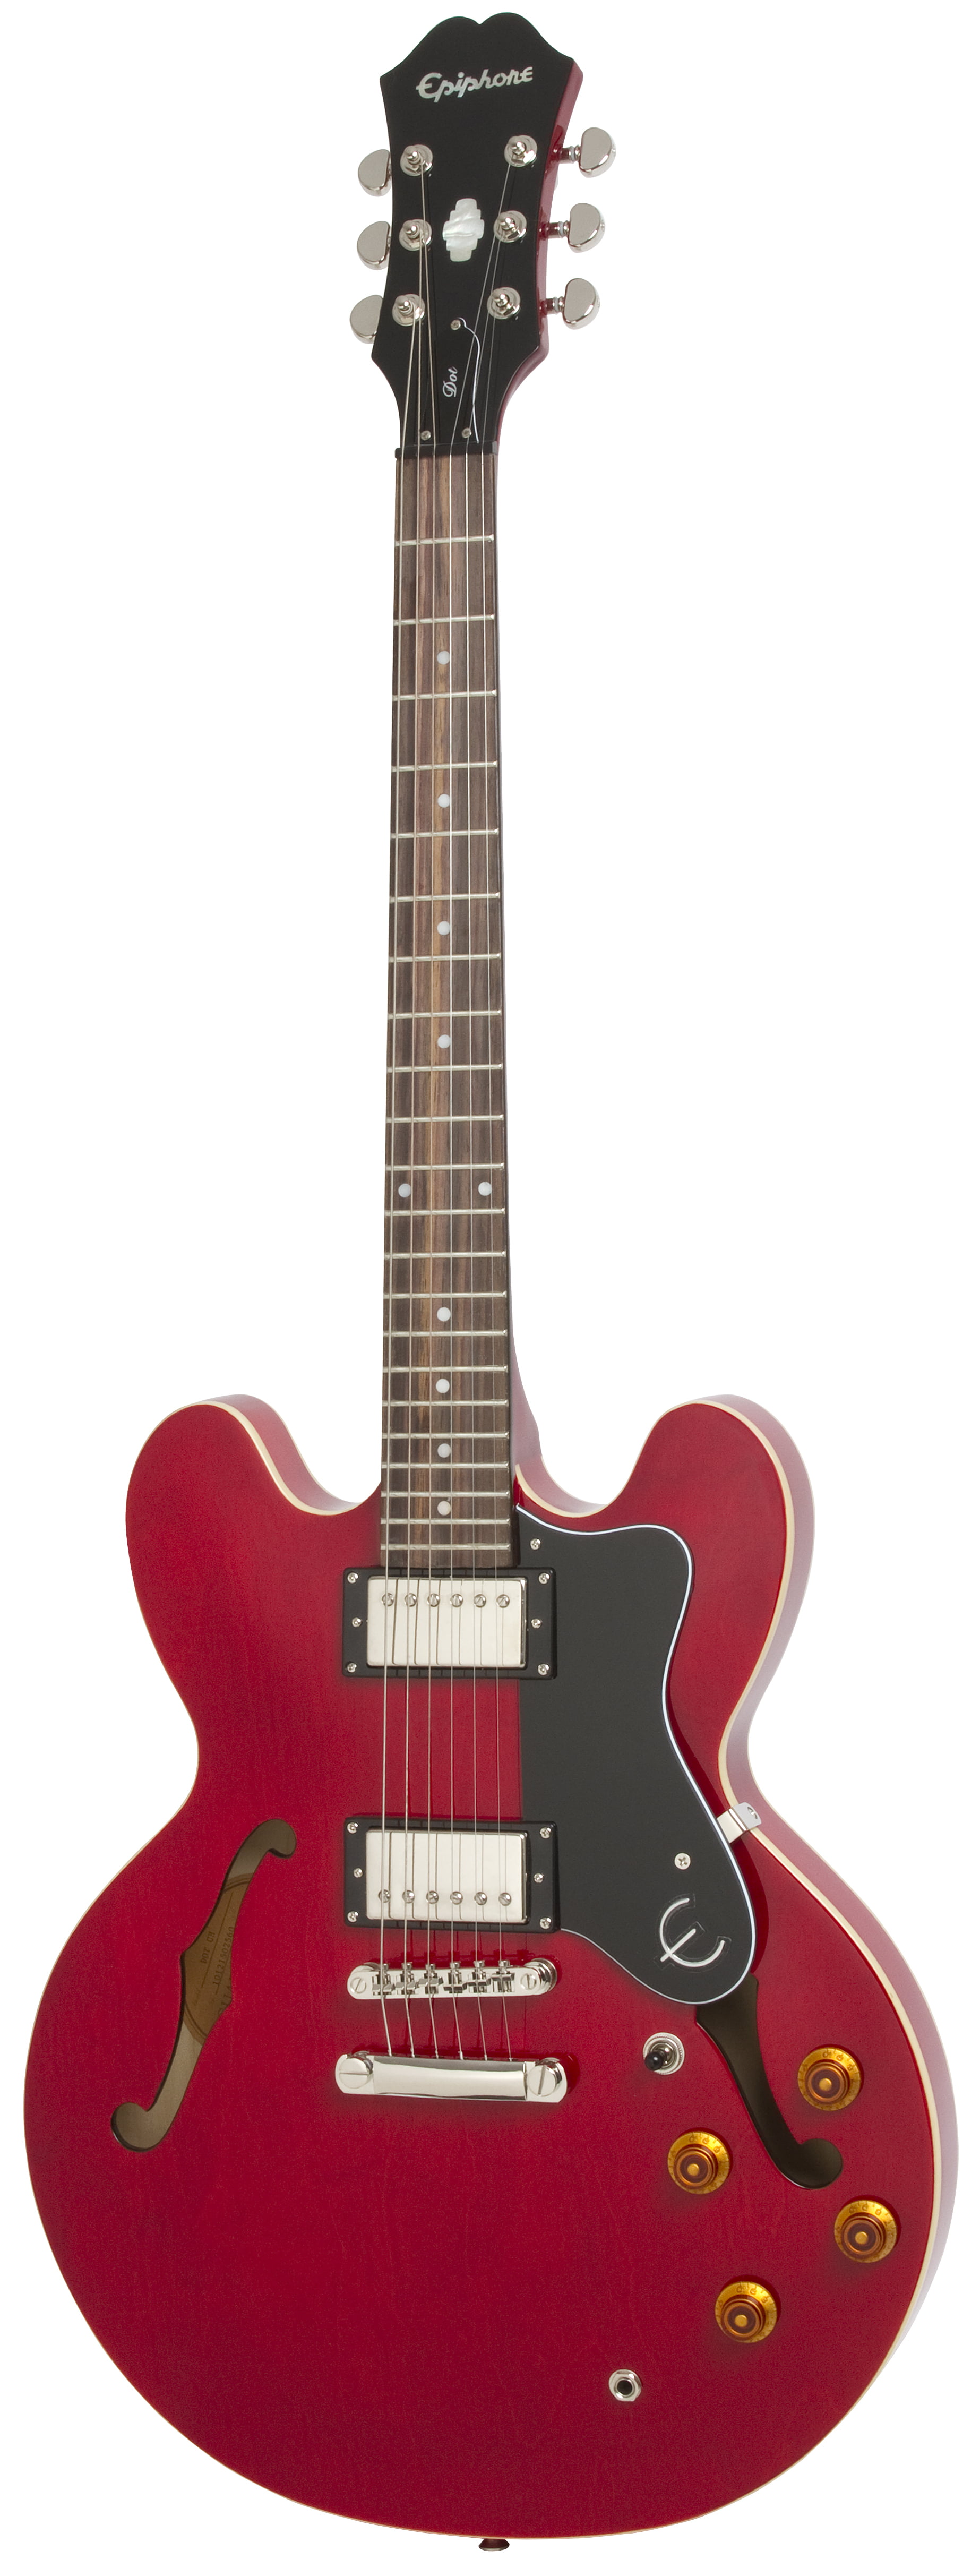 Epiphone ES-335 DOT Electric Guitar - Walmart.com